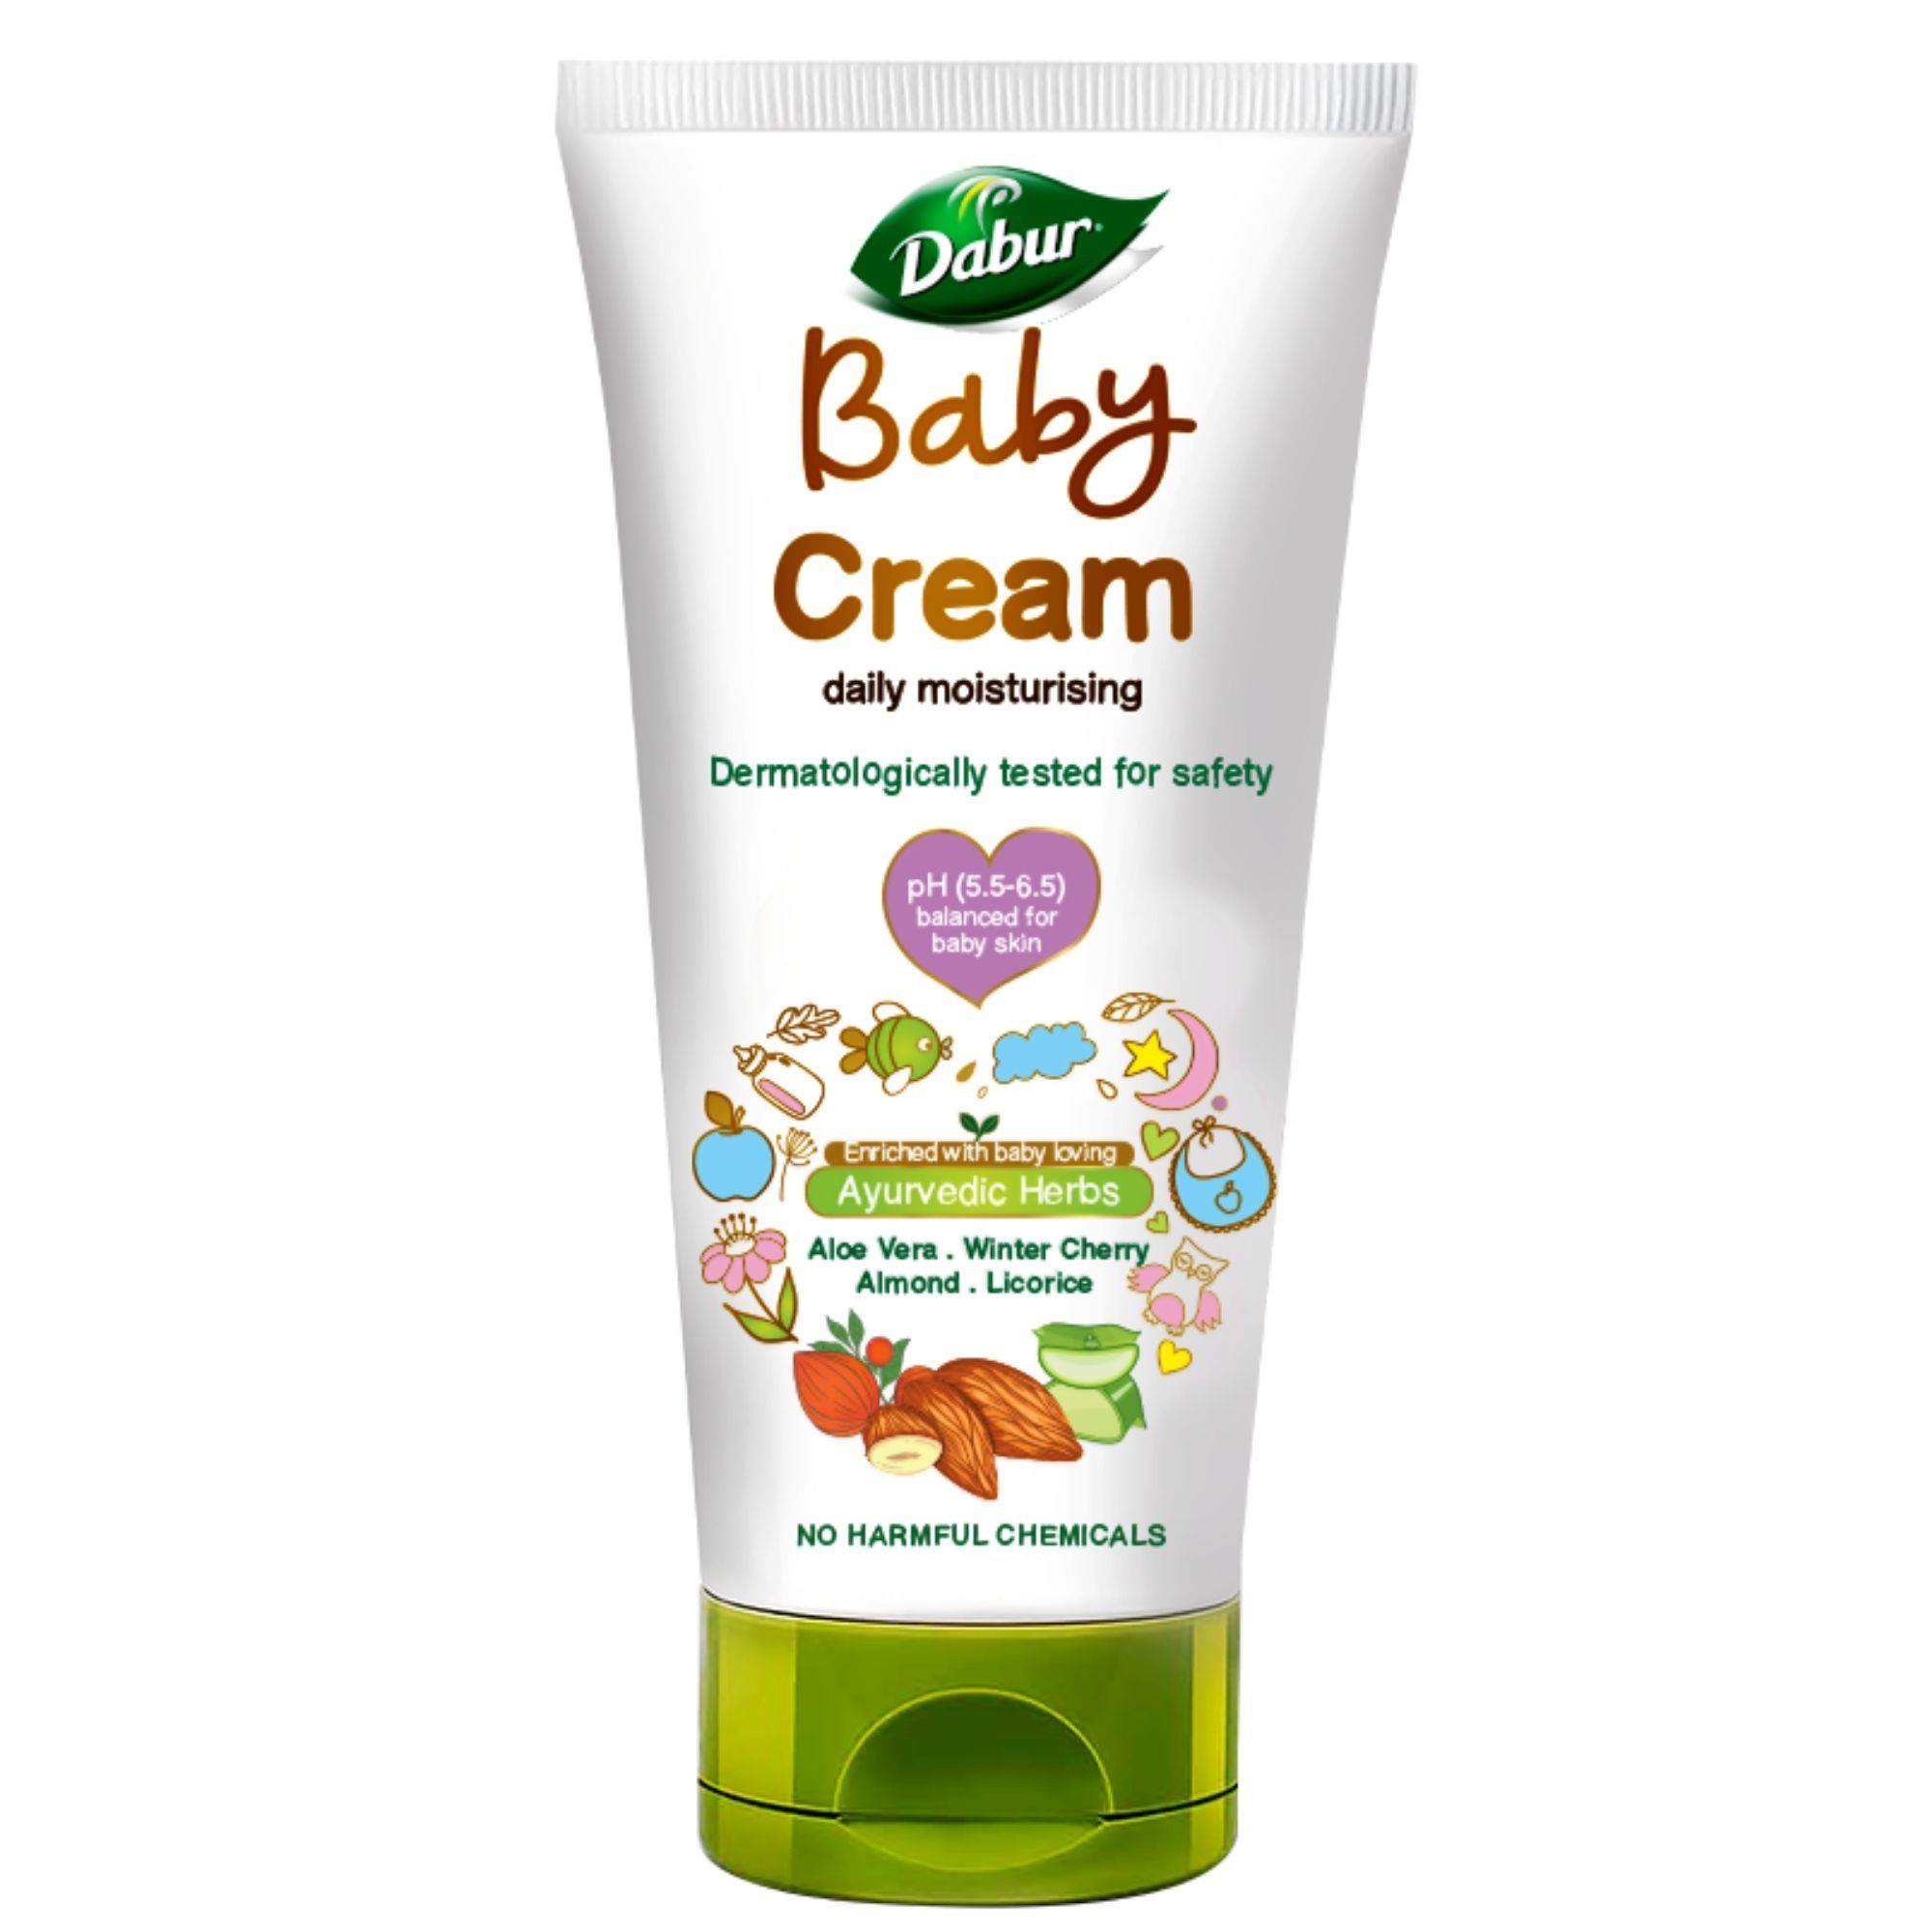 Dabur Daily Moisturising Baby Cream Enriched with Ayurvedic Herbs